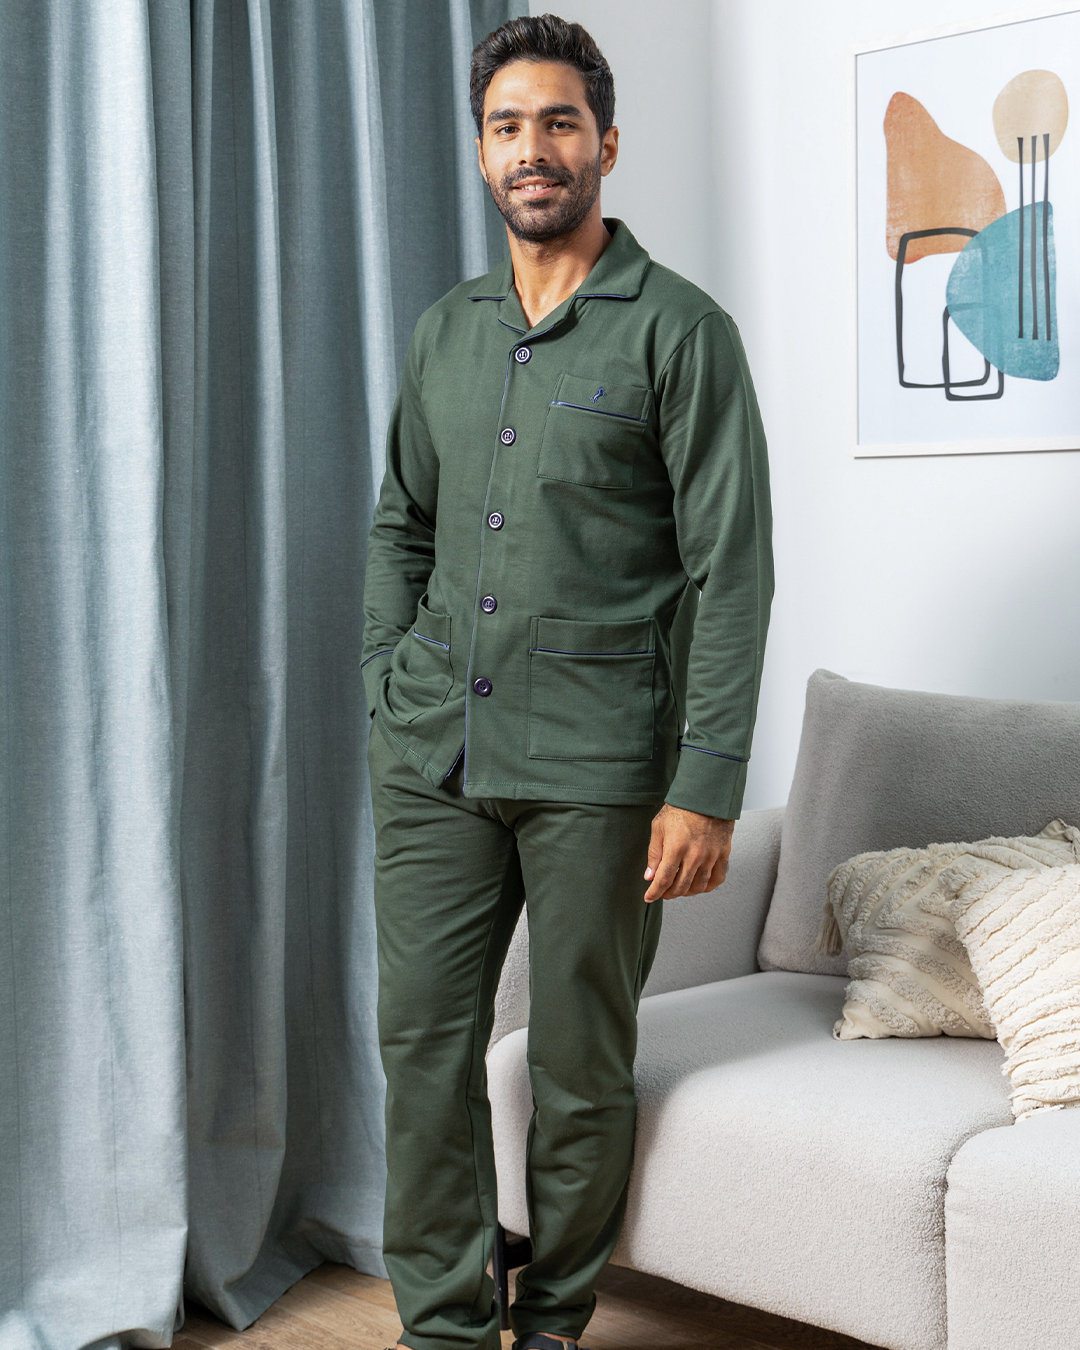 Men's open pajamas for Milton laser